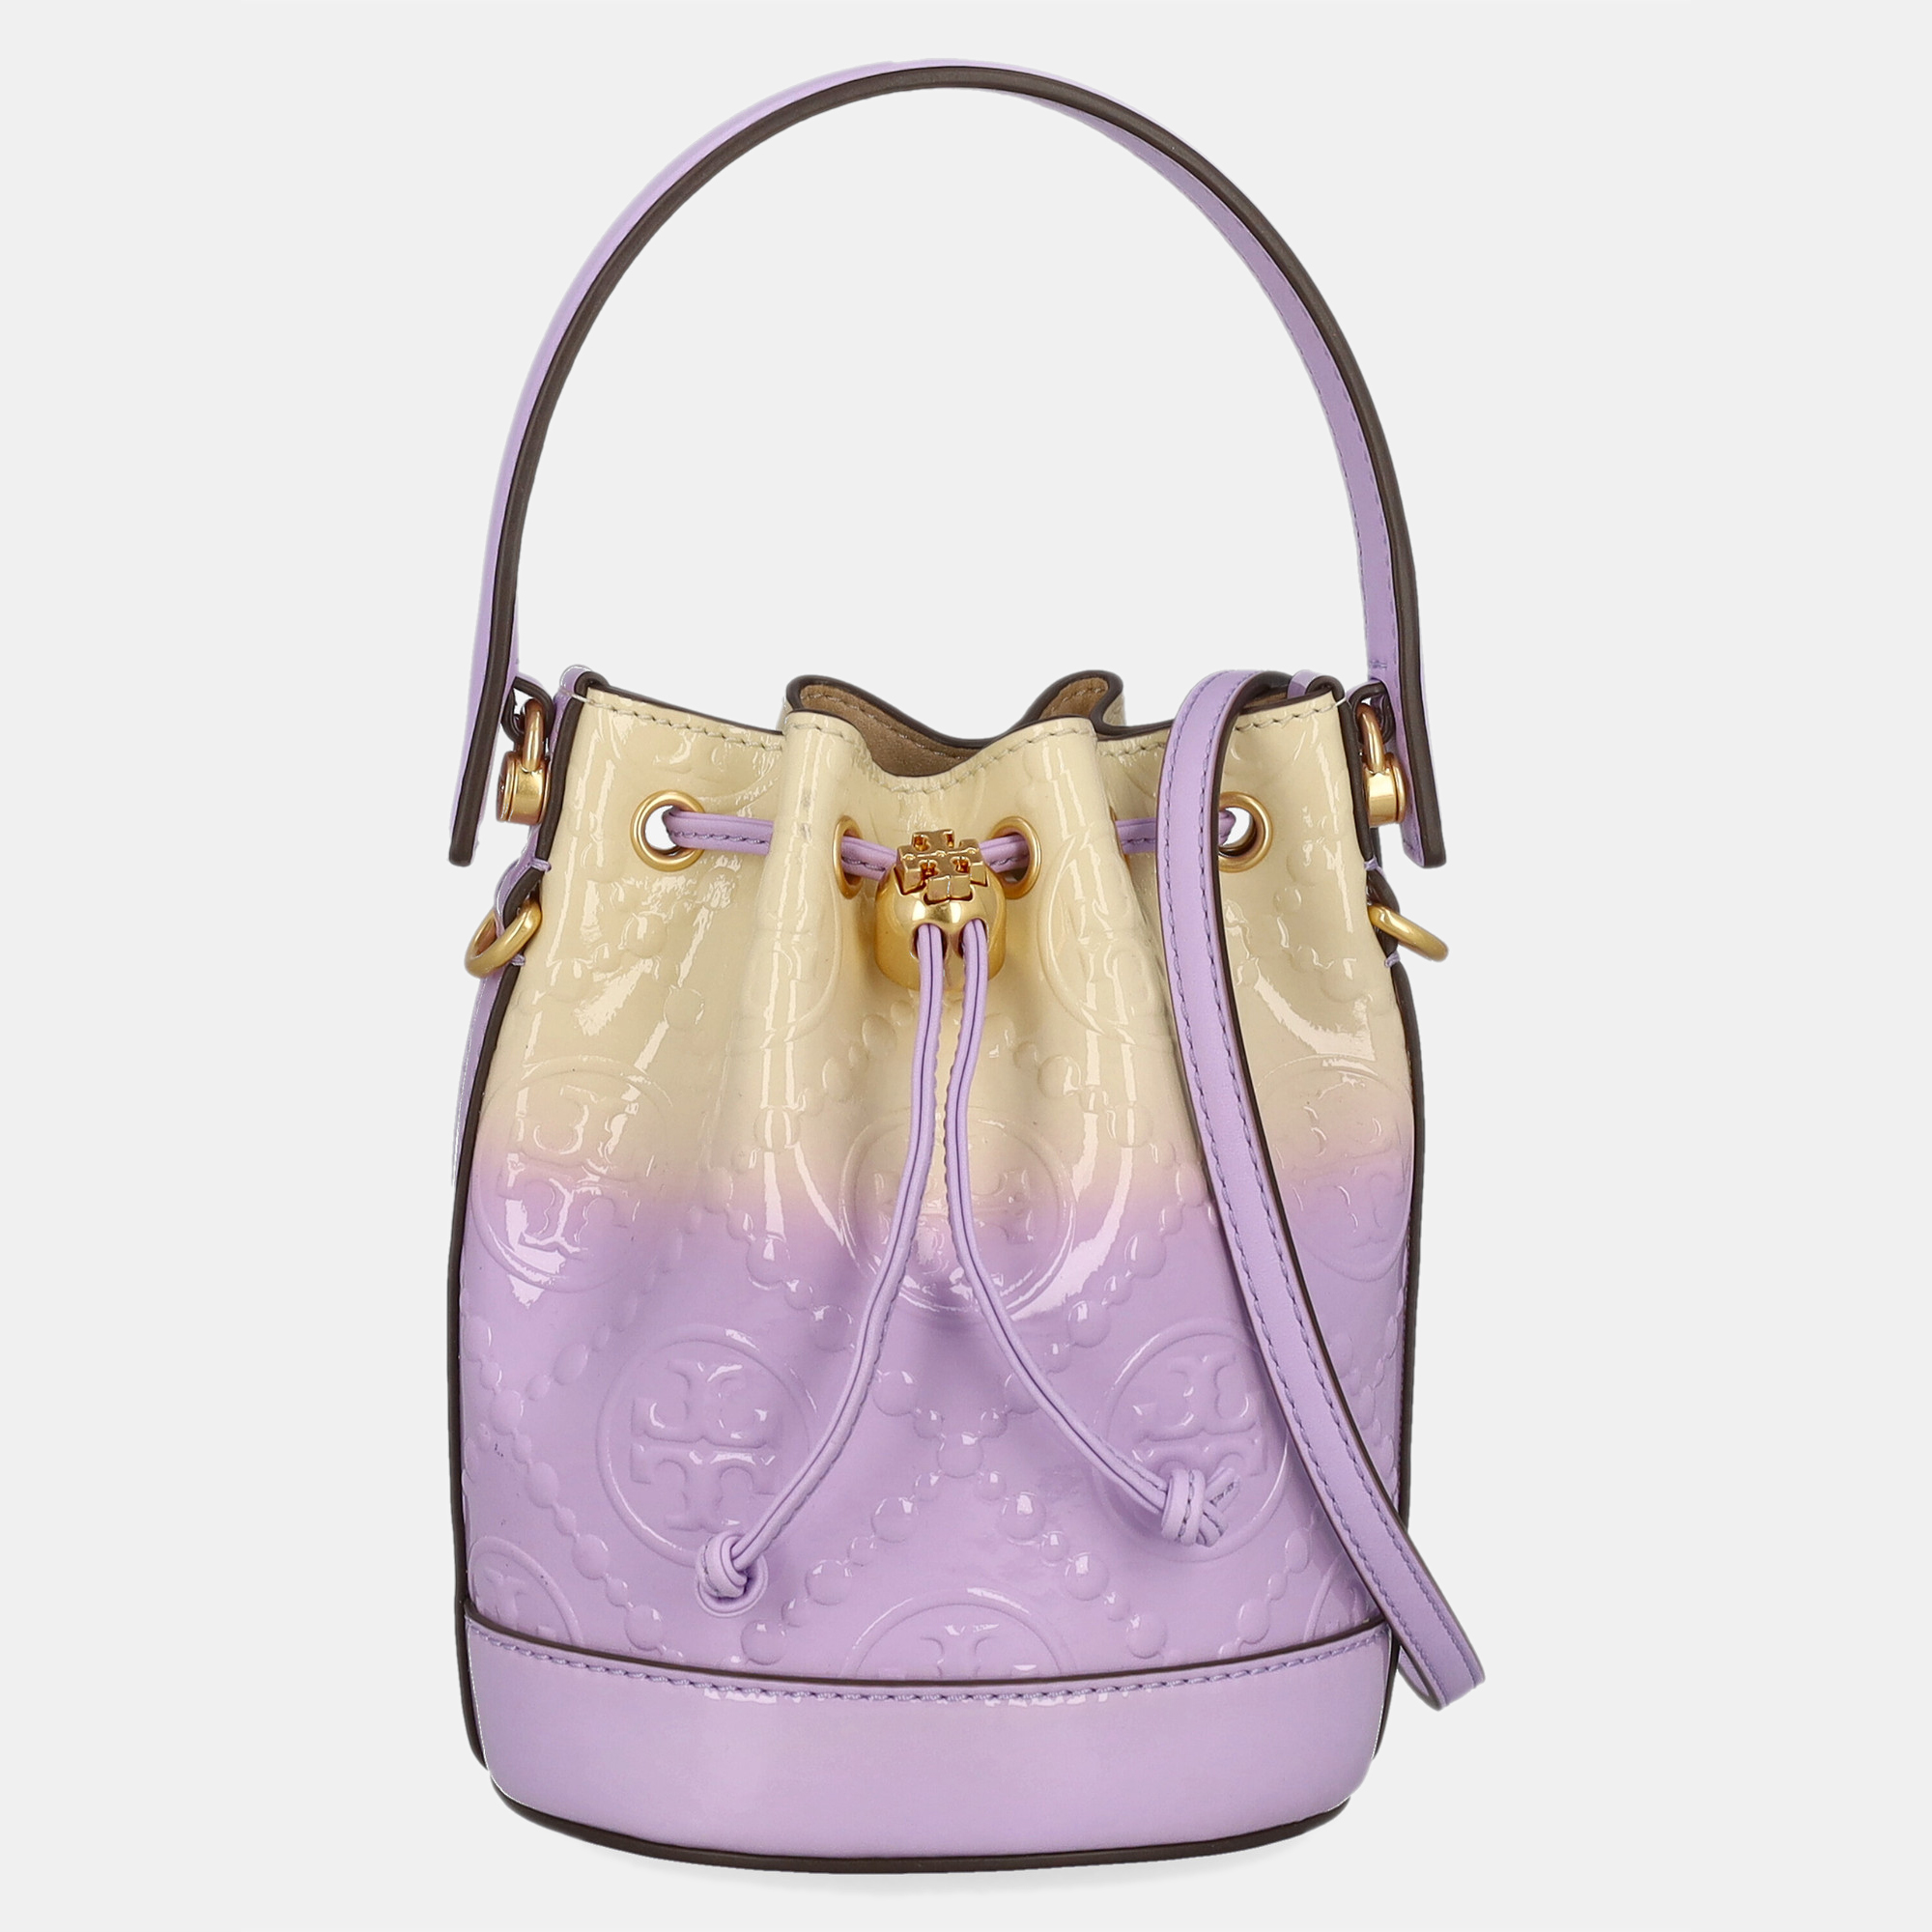 Tory Burch  Women's Leather Bucket Bag - Purple - One Size